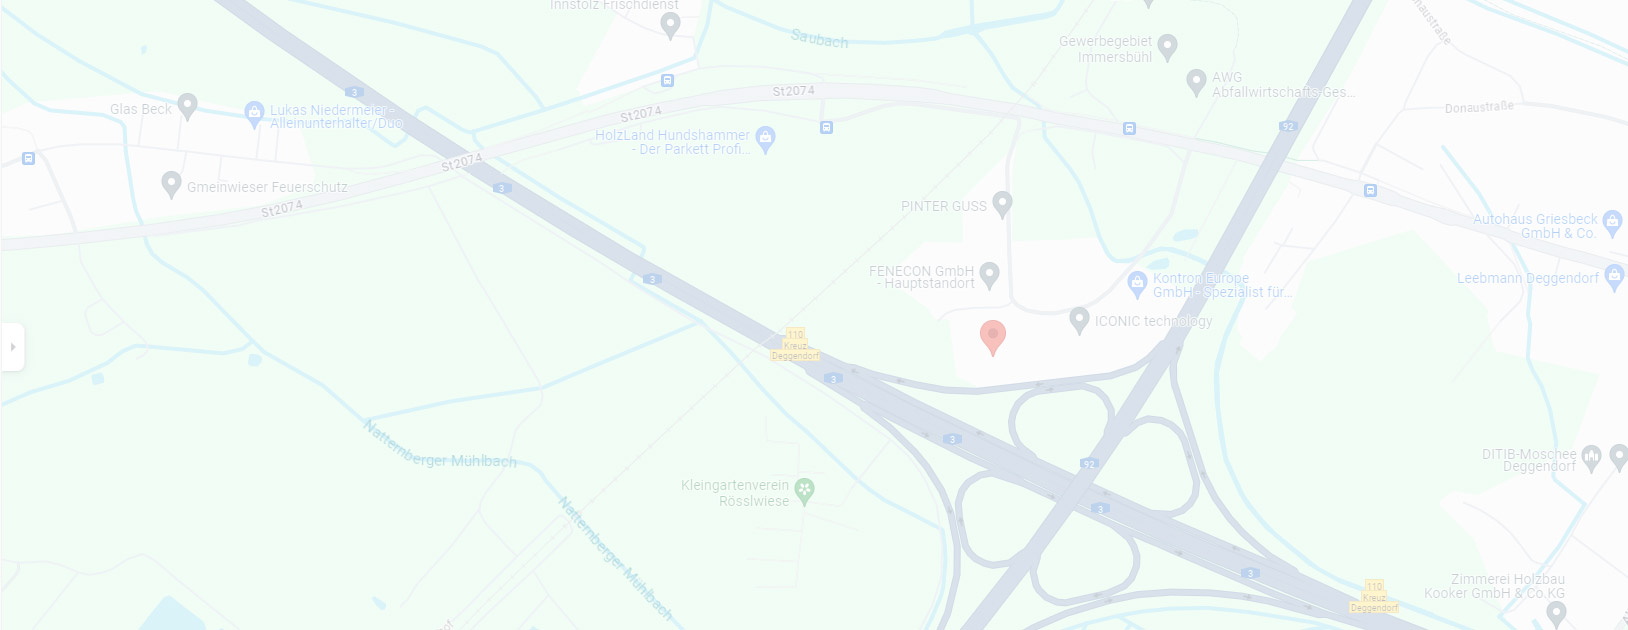 Google Maps - Map ID 1bd84d1f